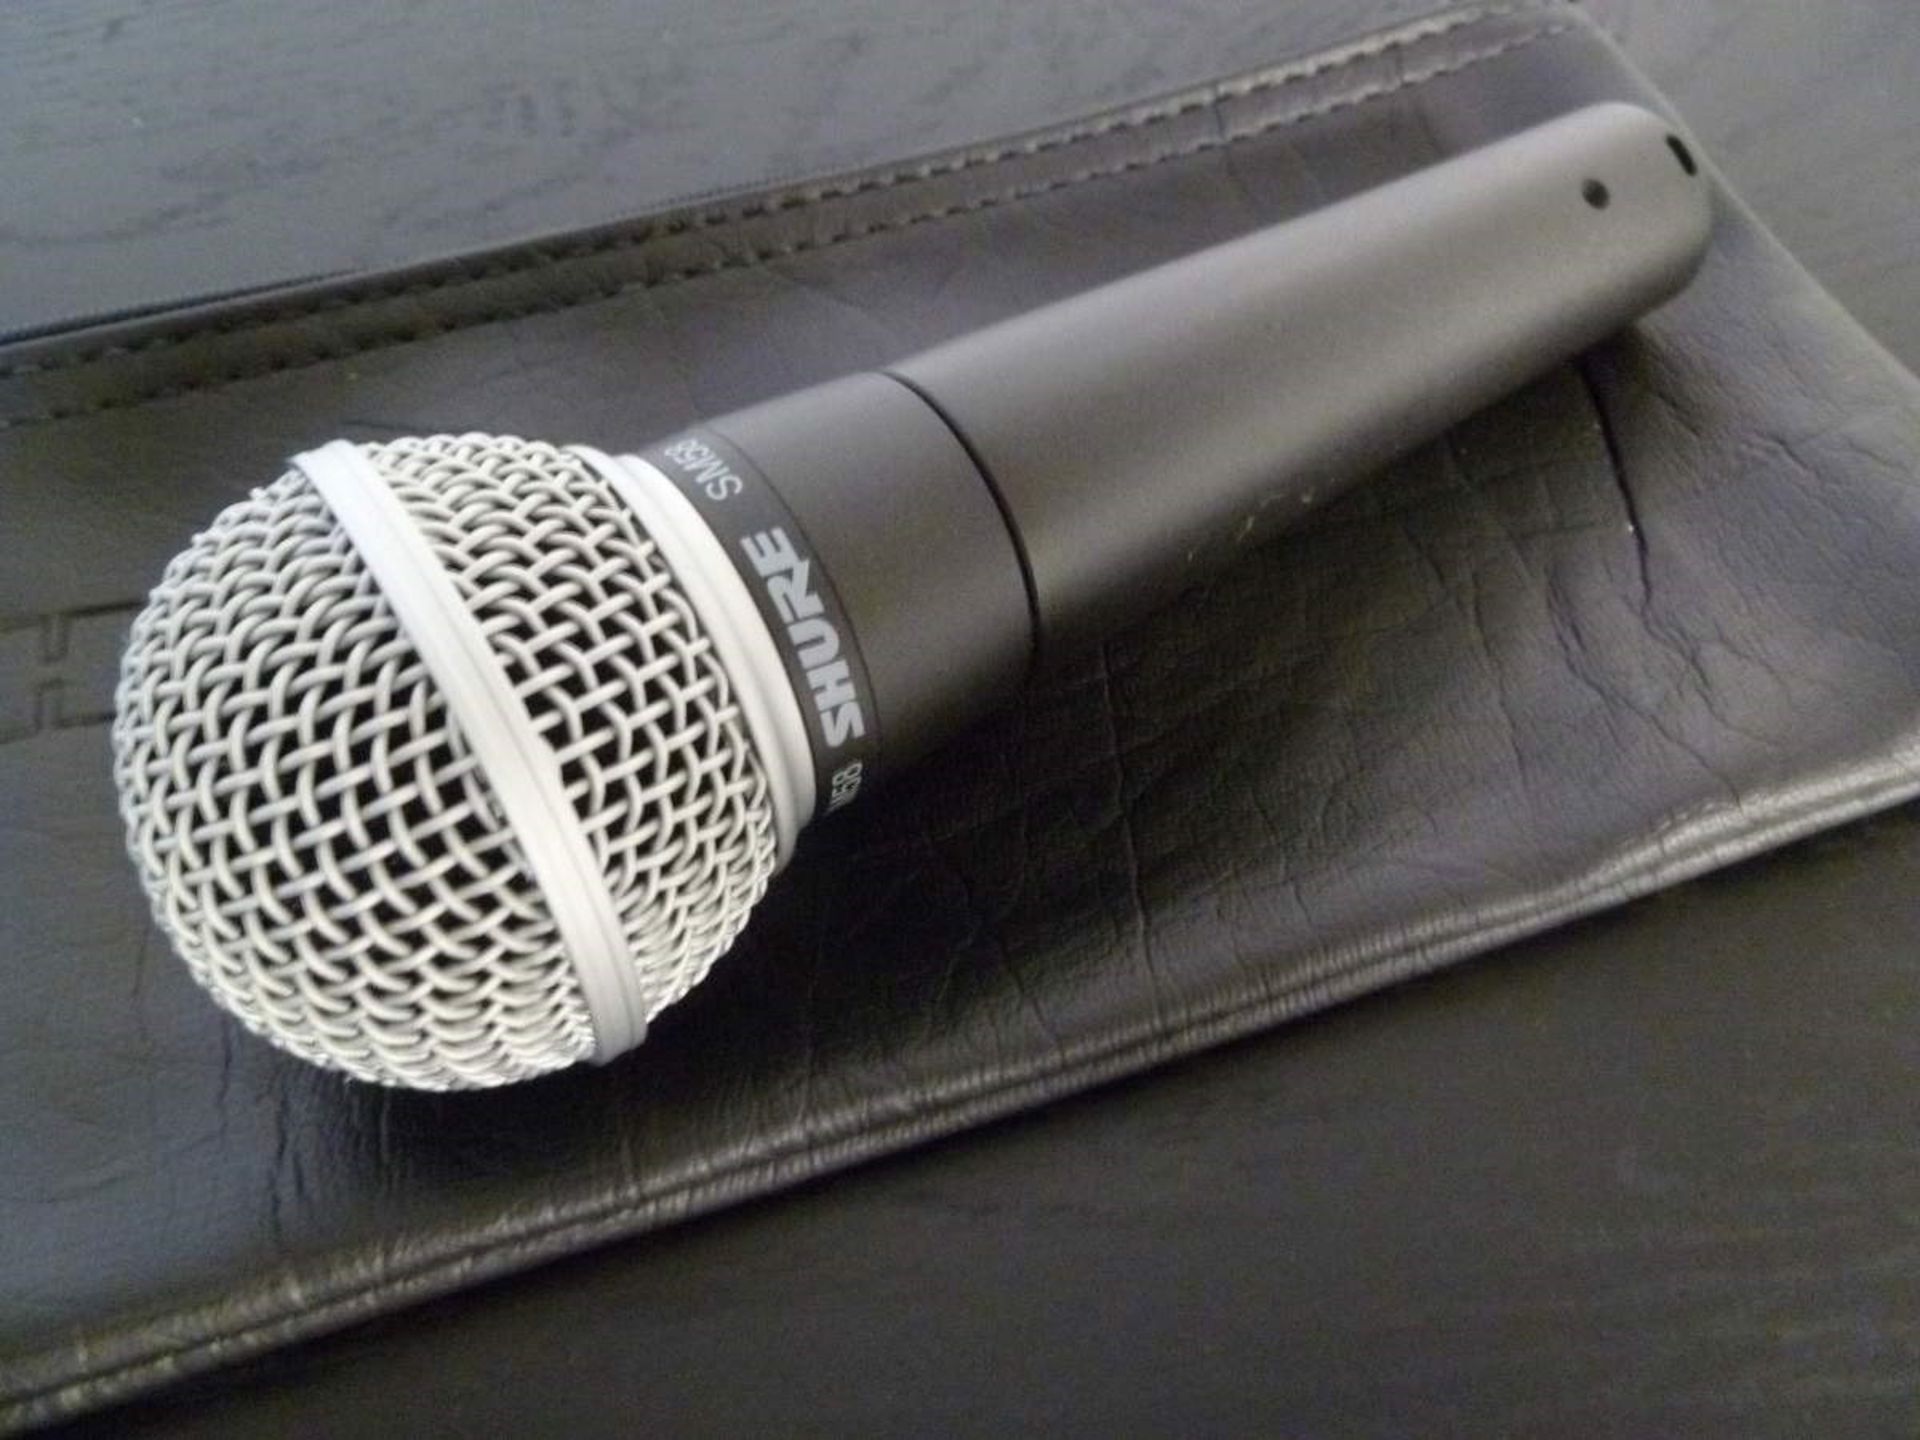 1 x Shure SM-58 Microphone With Orignal Shure Bag - Ref: 685 - CL581 - Location: Altrincham WA14